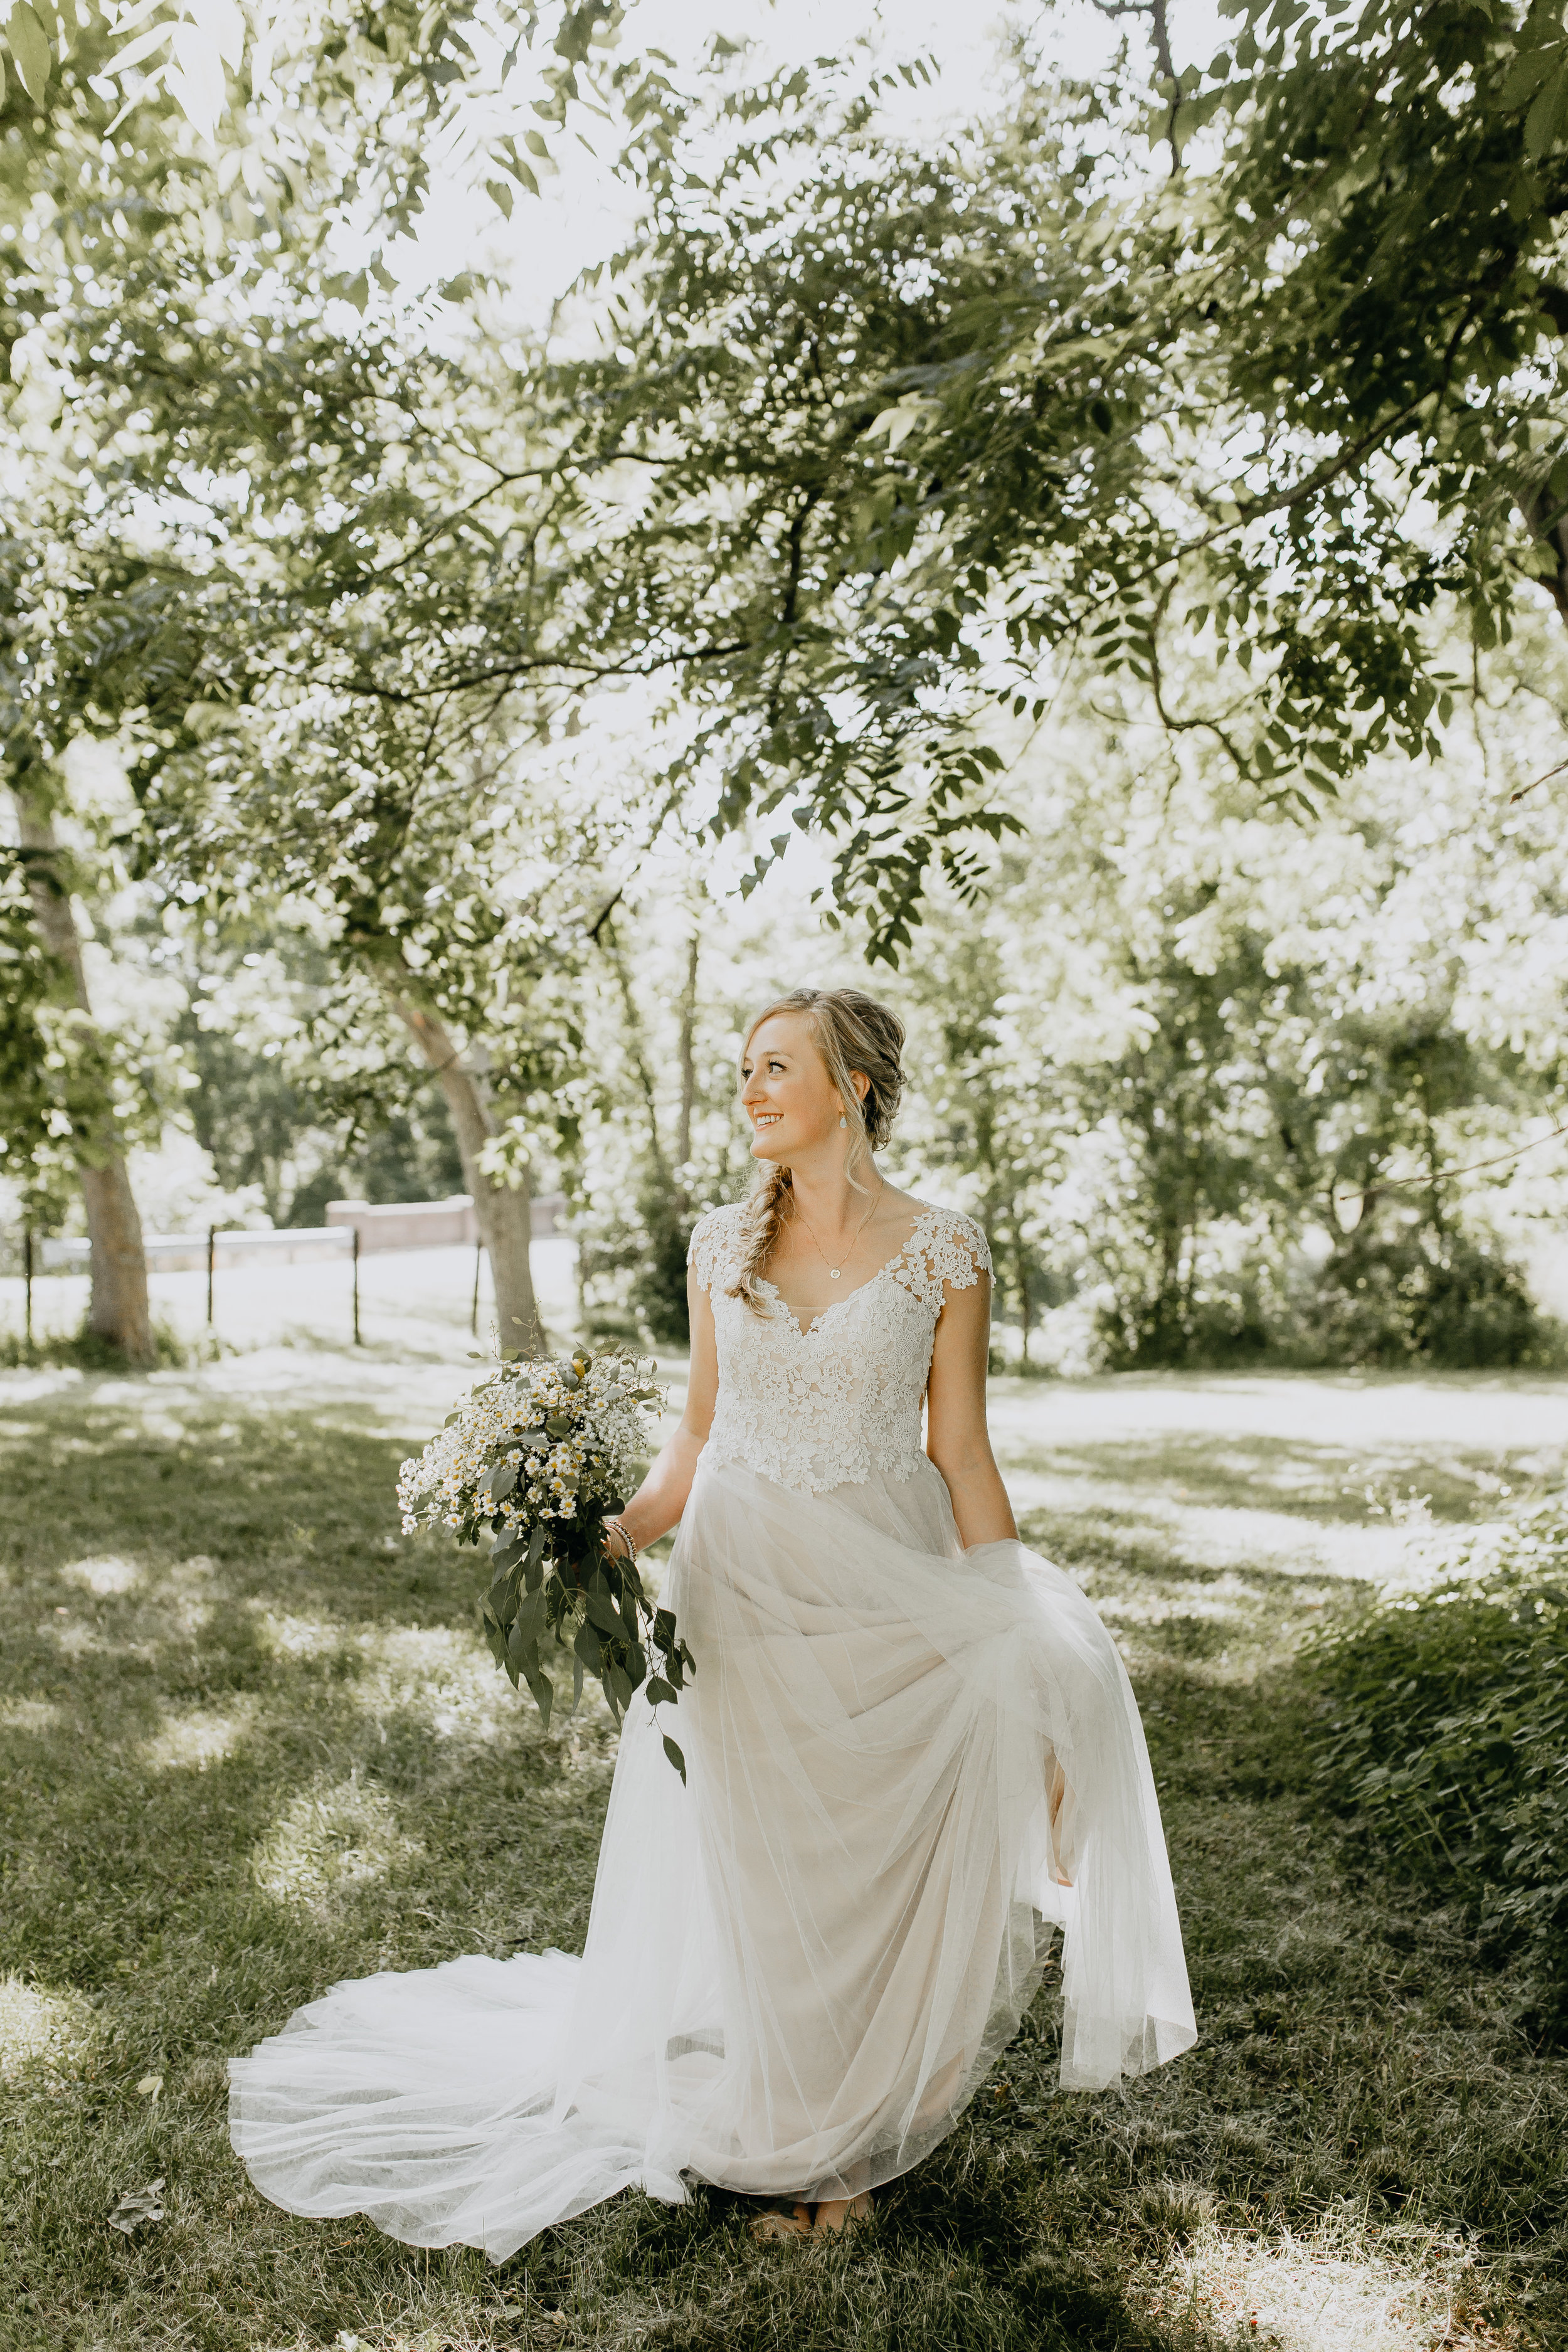 Nicole-Daacke-Photography-pennsylvania-laid-back-outside-backyard-wedding-family-summer-june-maryland-barefoot-bride-woodland-trees-sunset-couple-27.jpg